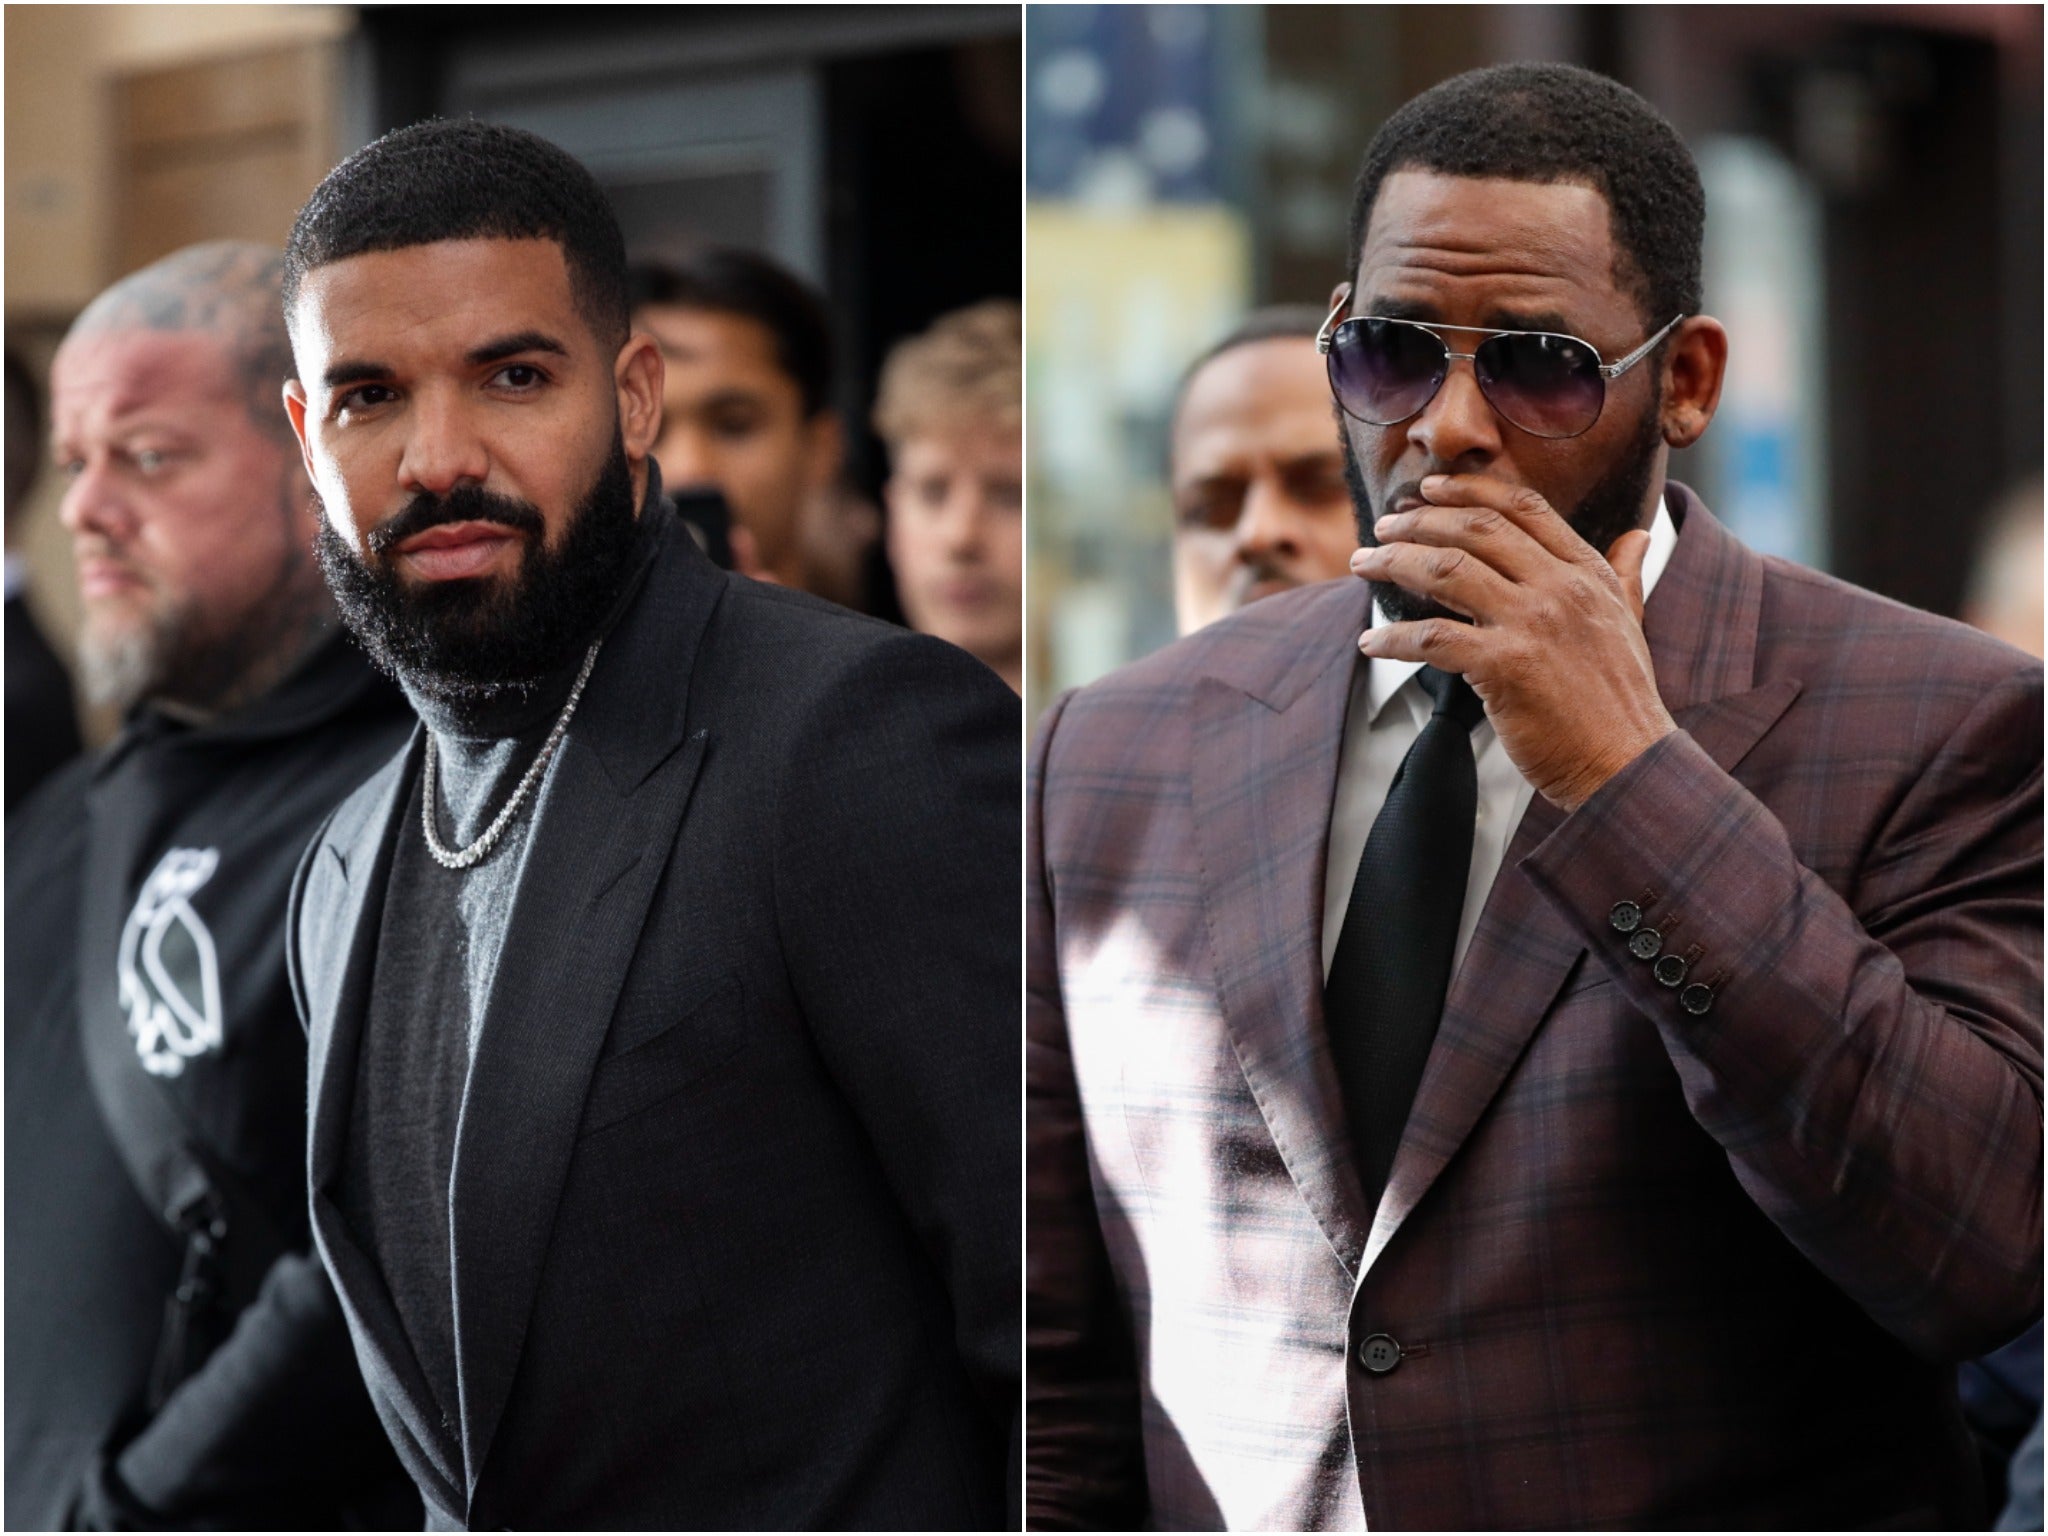 Drake album credits R Kelly as co-lyricist